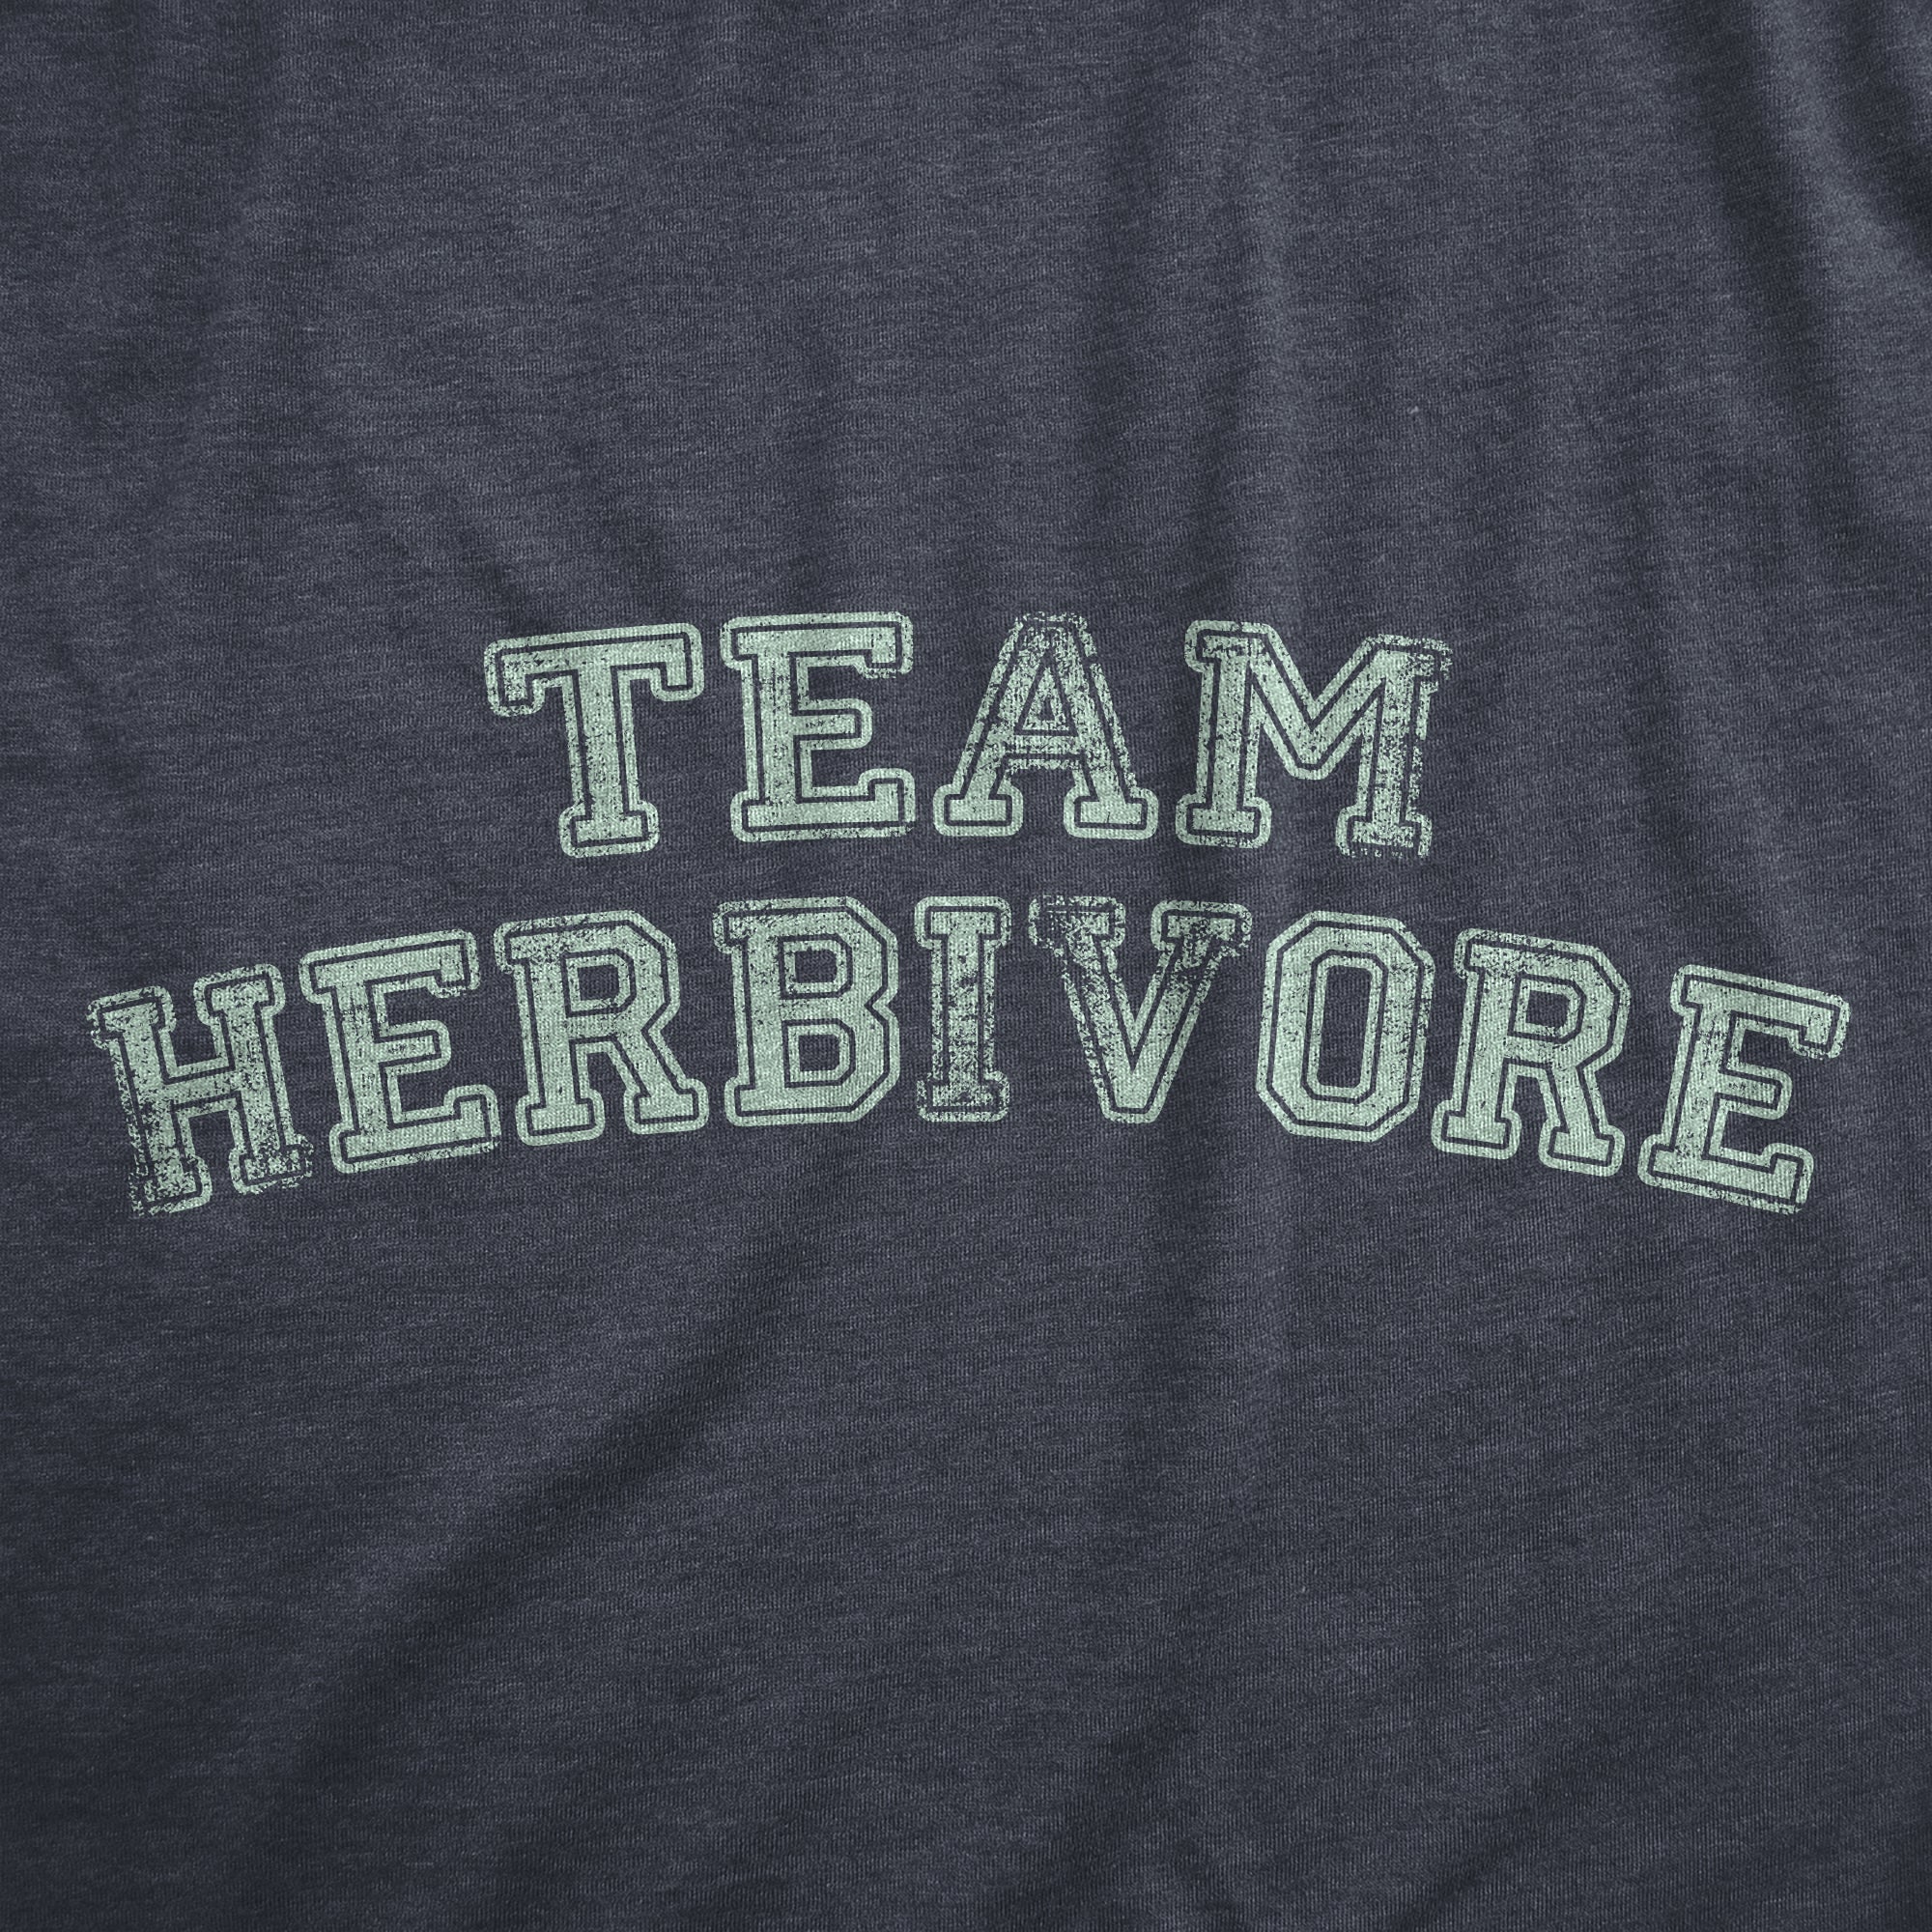 Funny Heather Navy - HERBIVORE Team Herbivore Mens T Shirt Nerdy Food Sarcastic Tee